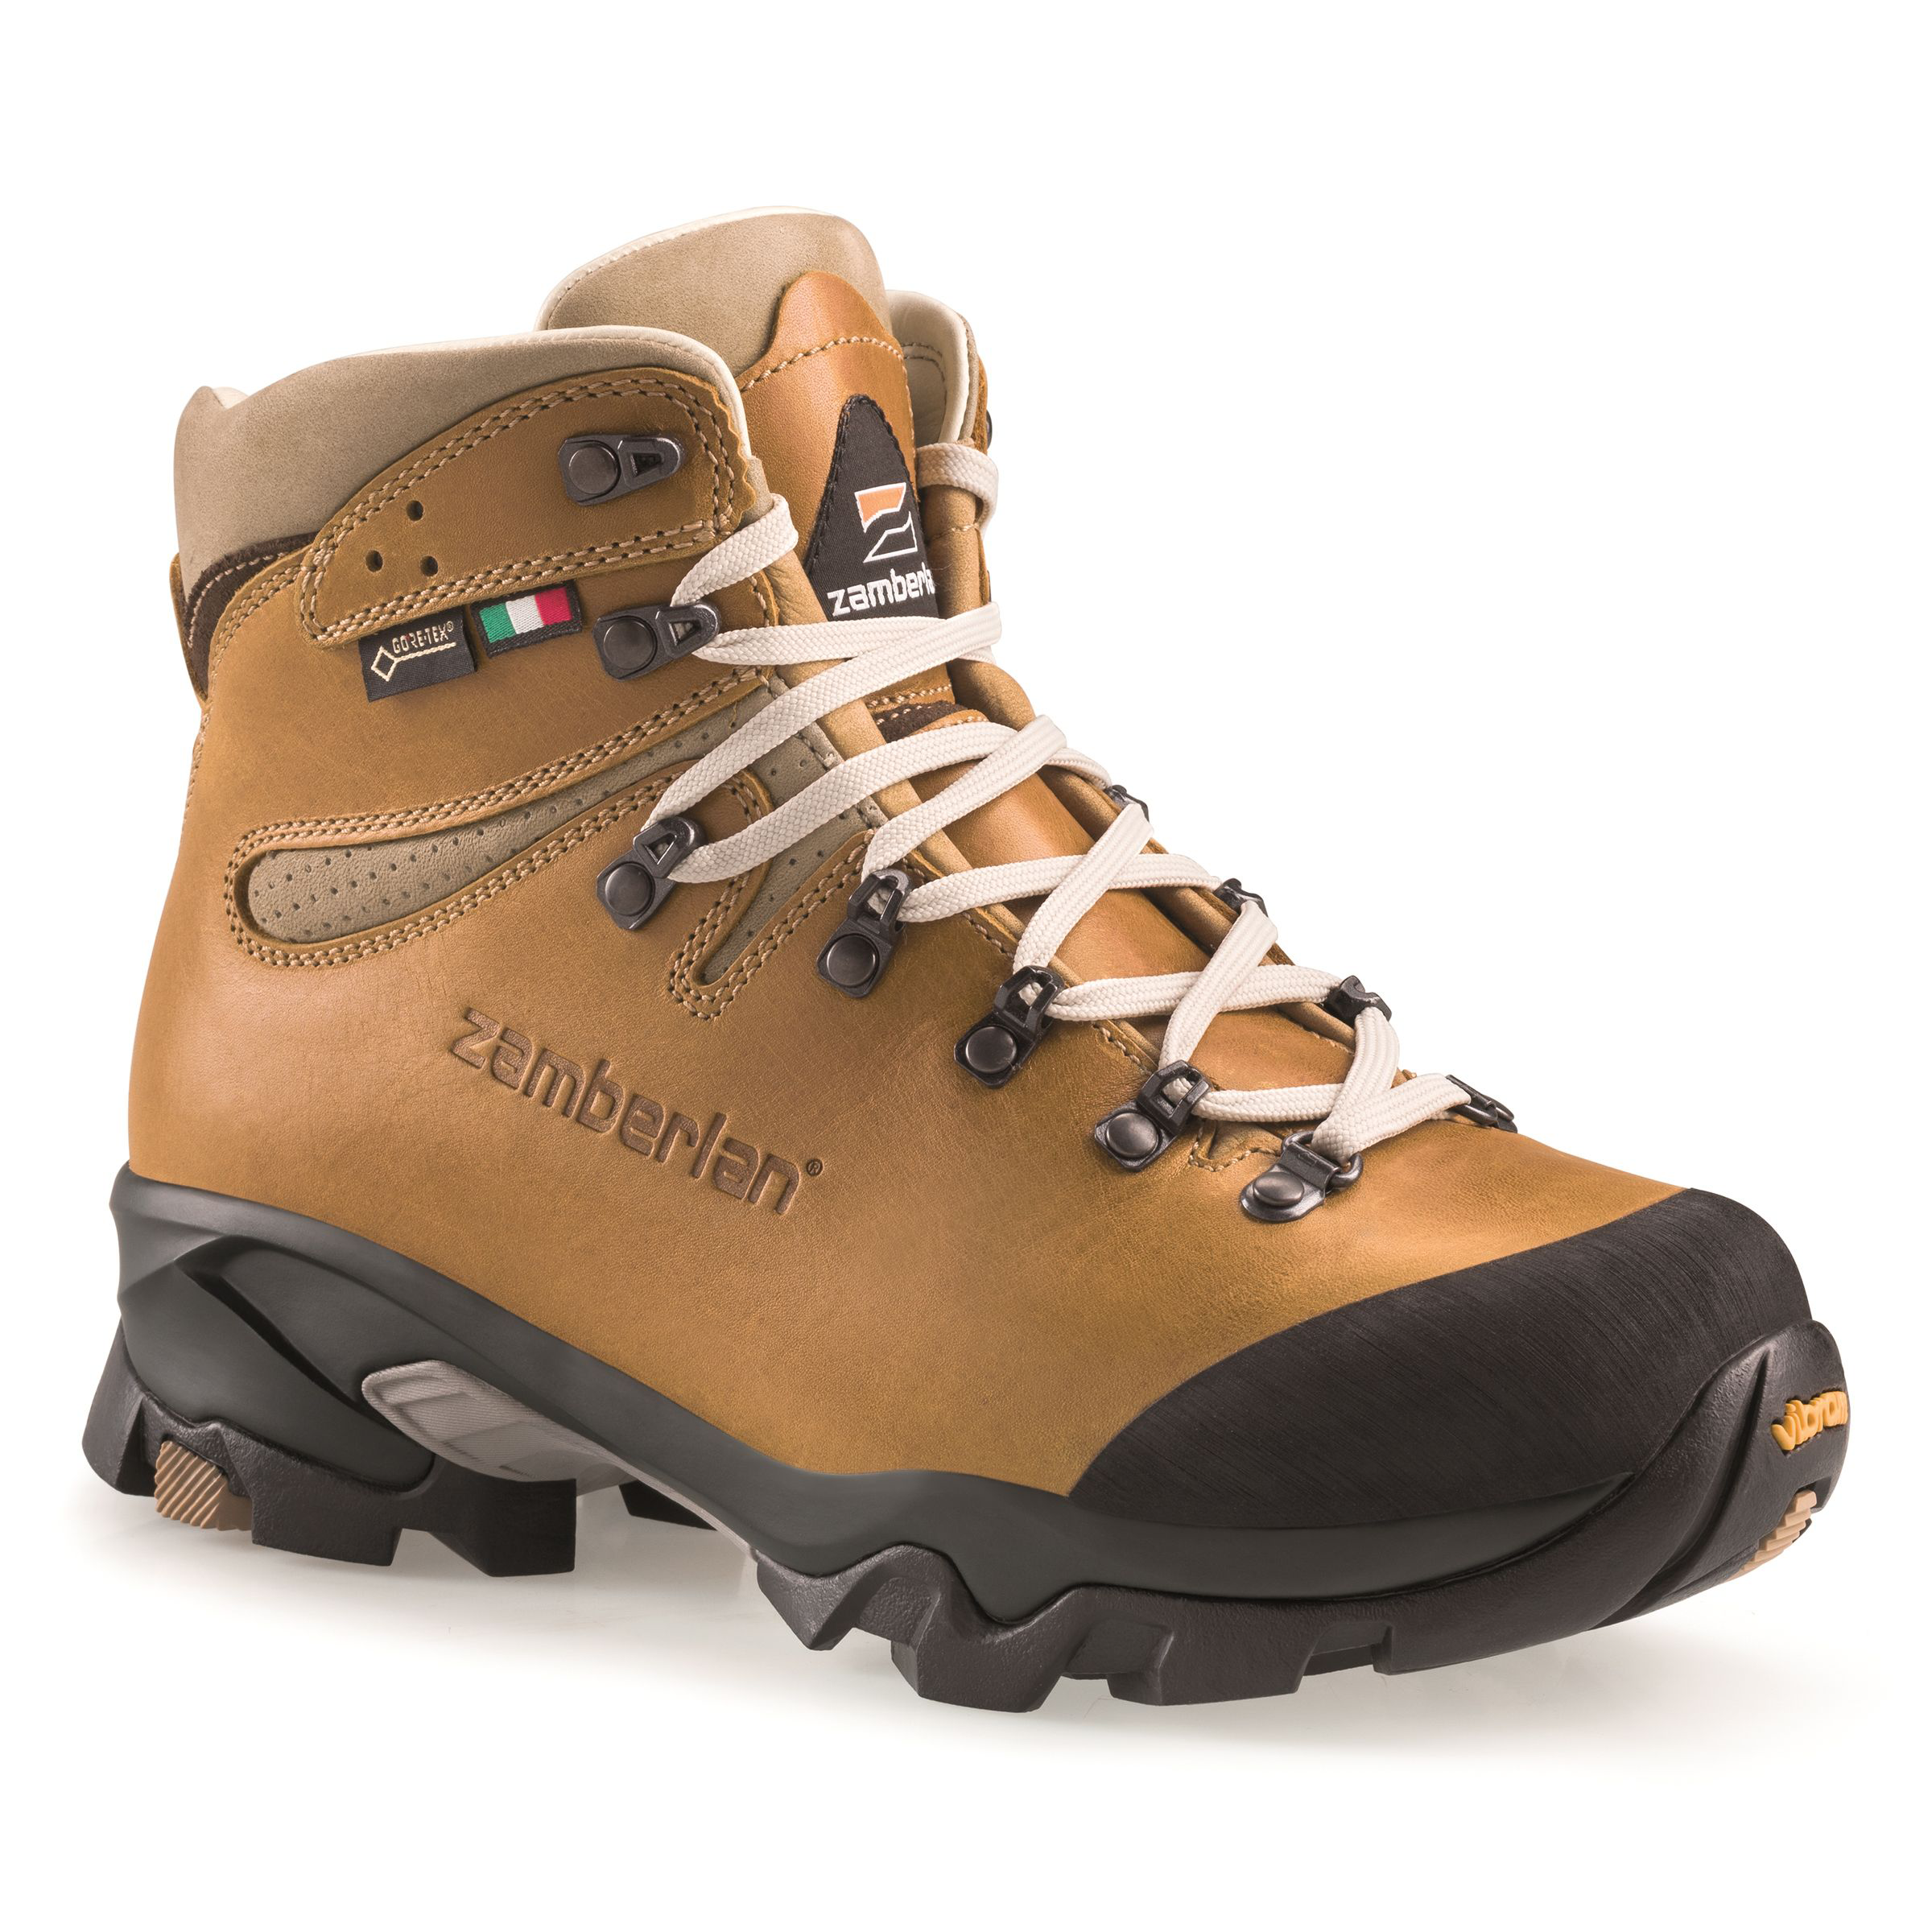 Zamberlan 1996 Vioz Lux GTX RR Waterproof Hiking Boots for Ladies - Brown - 11M